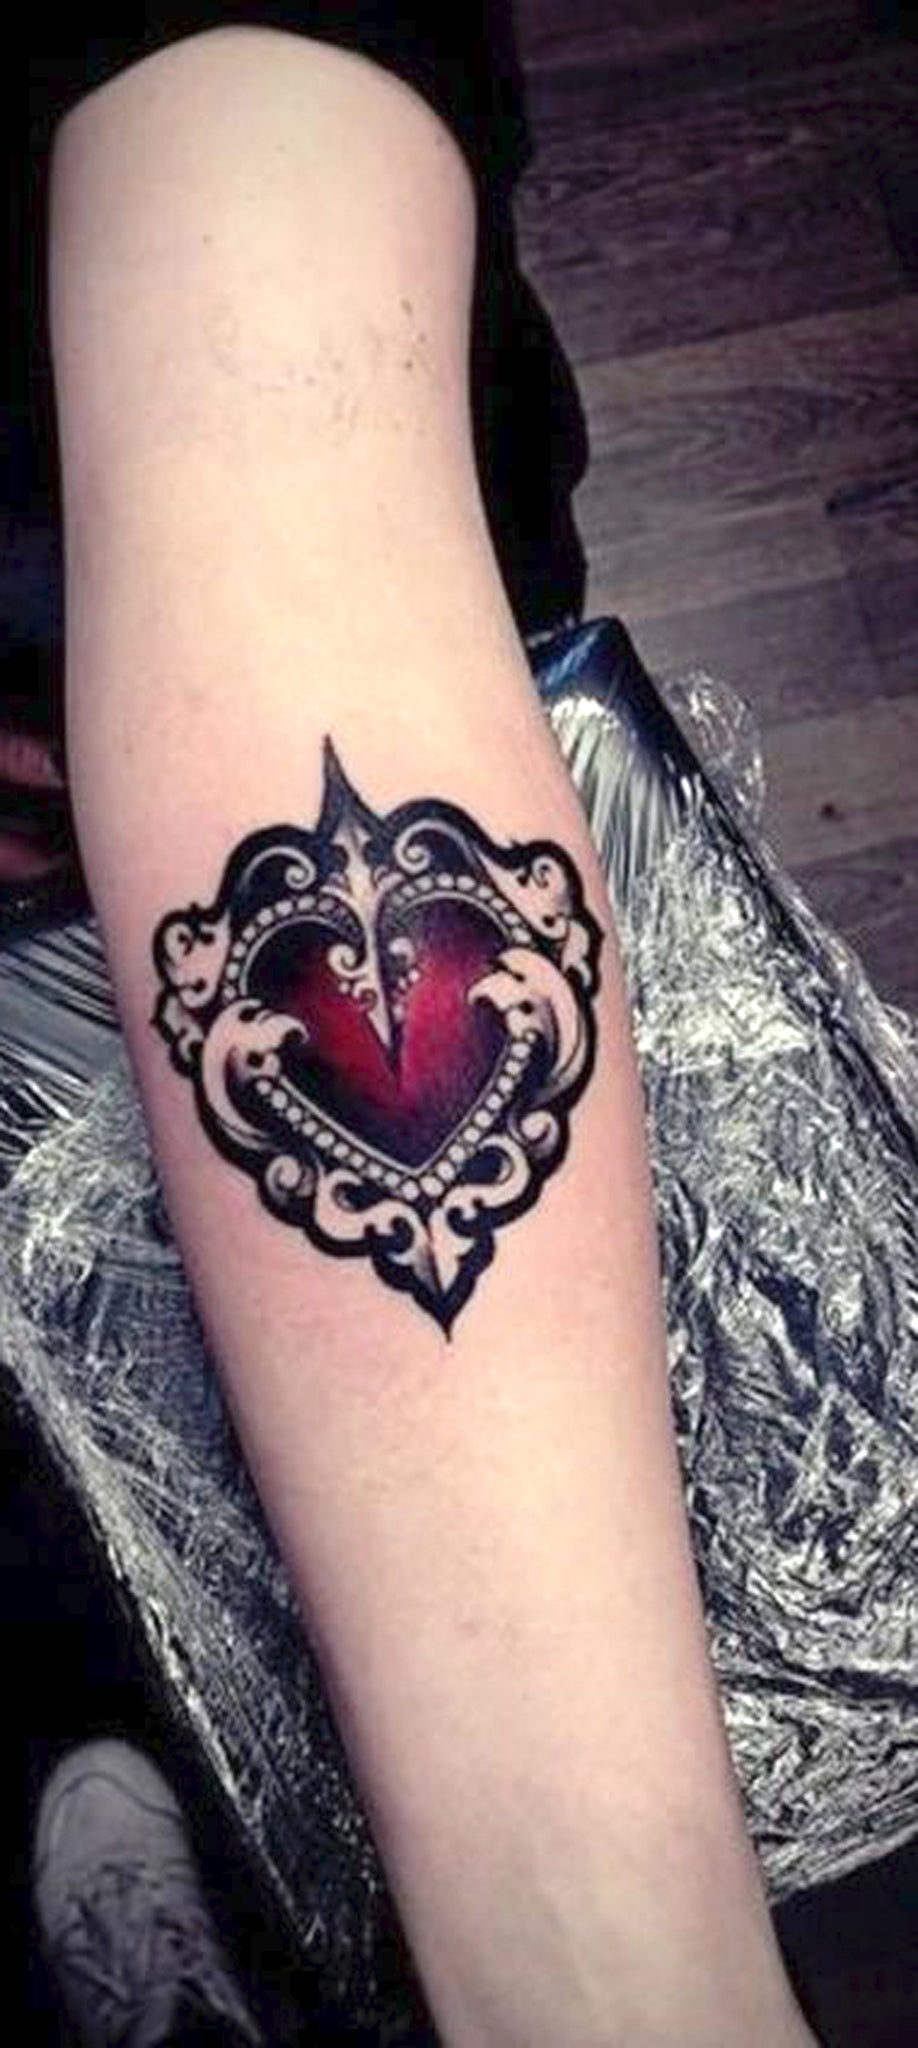 Vintage Victorian Red Heart Forearm Tattoo Ideas -  ideas de tatuaje de antebrazo corazón rojo - www.MyBodiArt.com